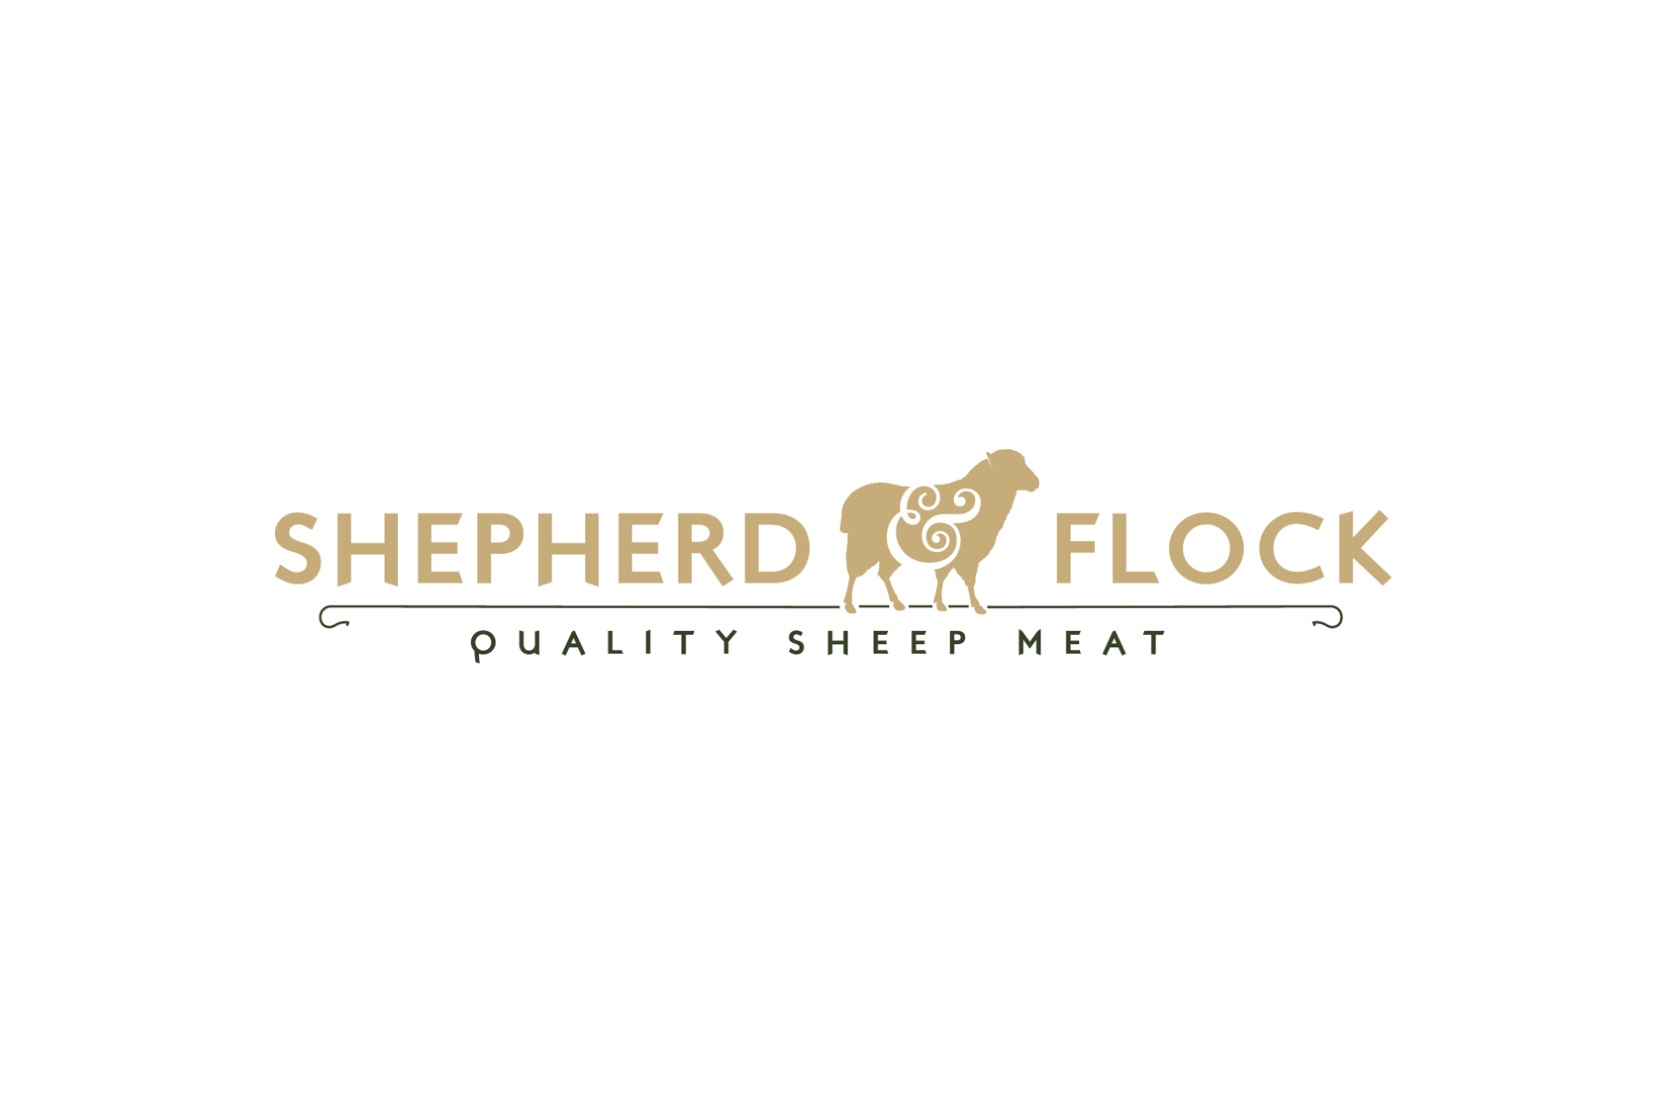 Shepherd & Flock Dunbia